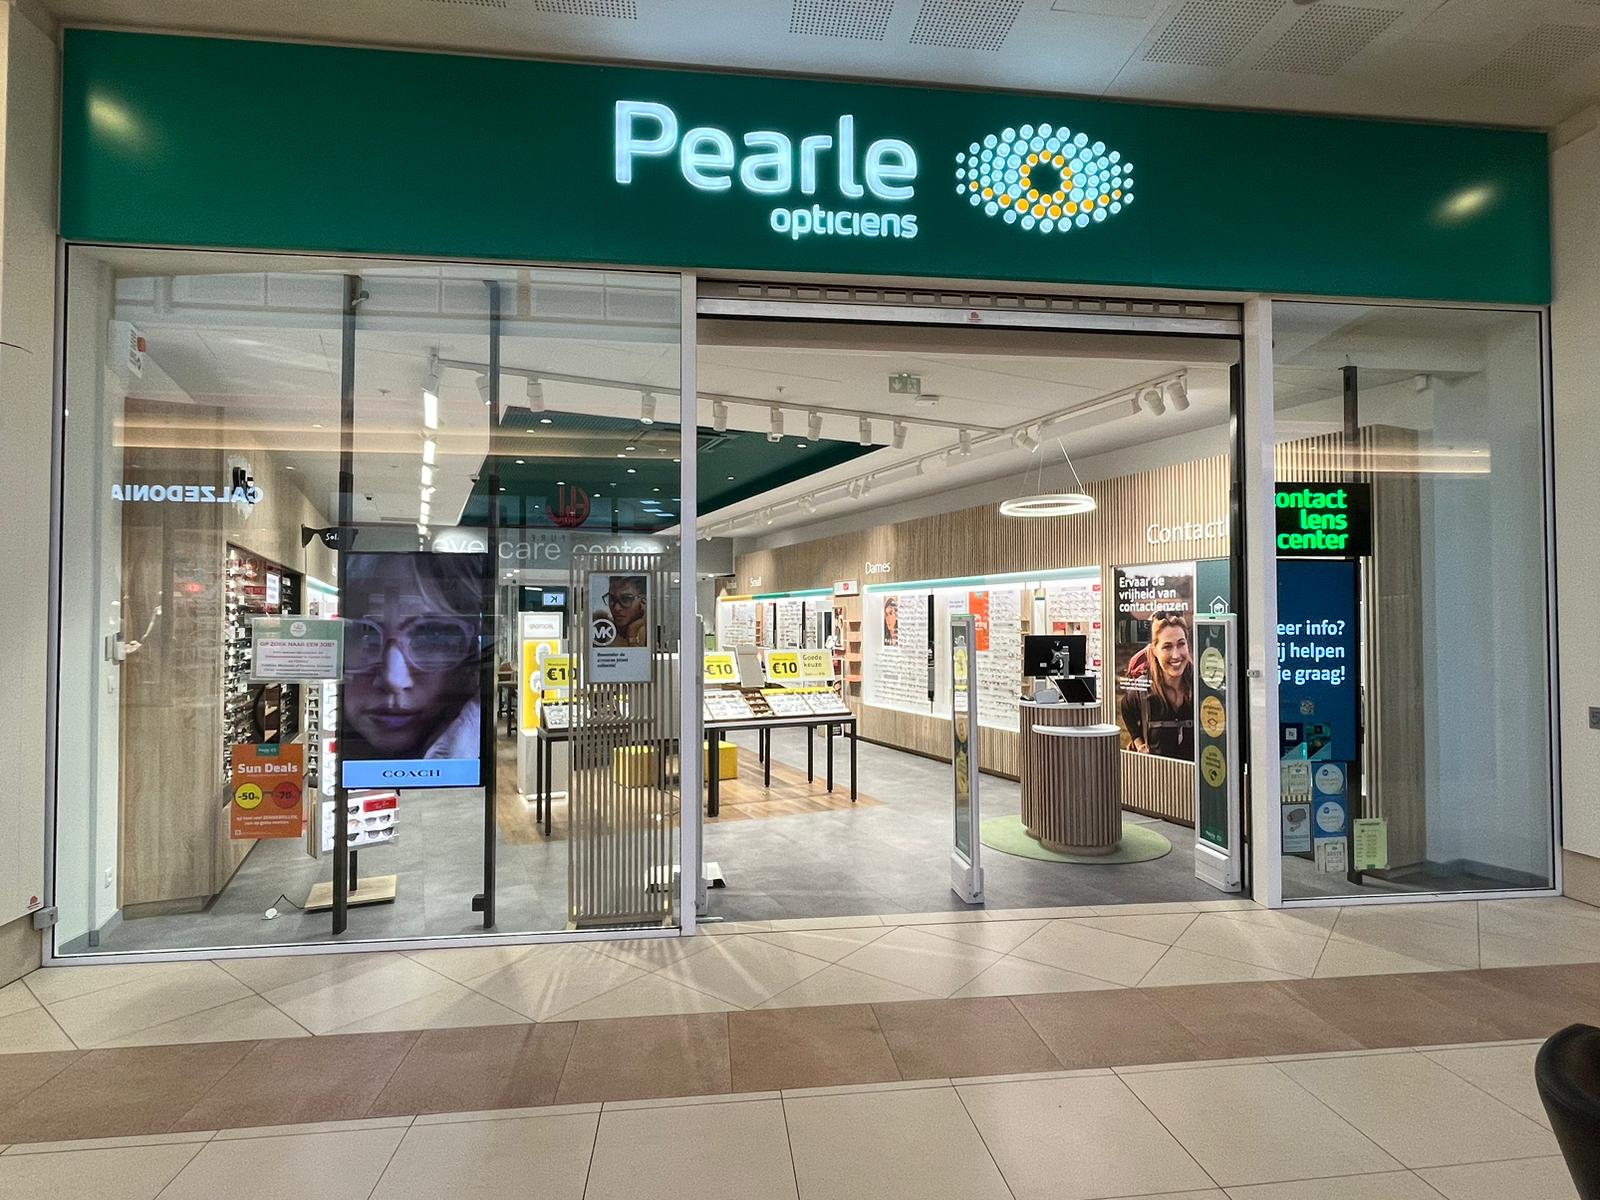 Pearle Opticiens Sint Niklaas - Waasland Shopping (+contact lens center)